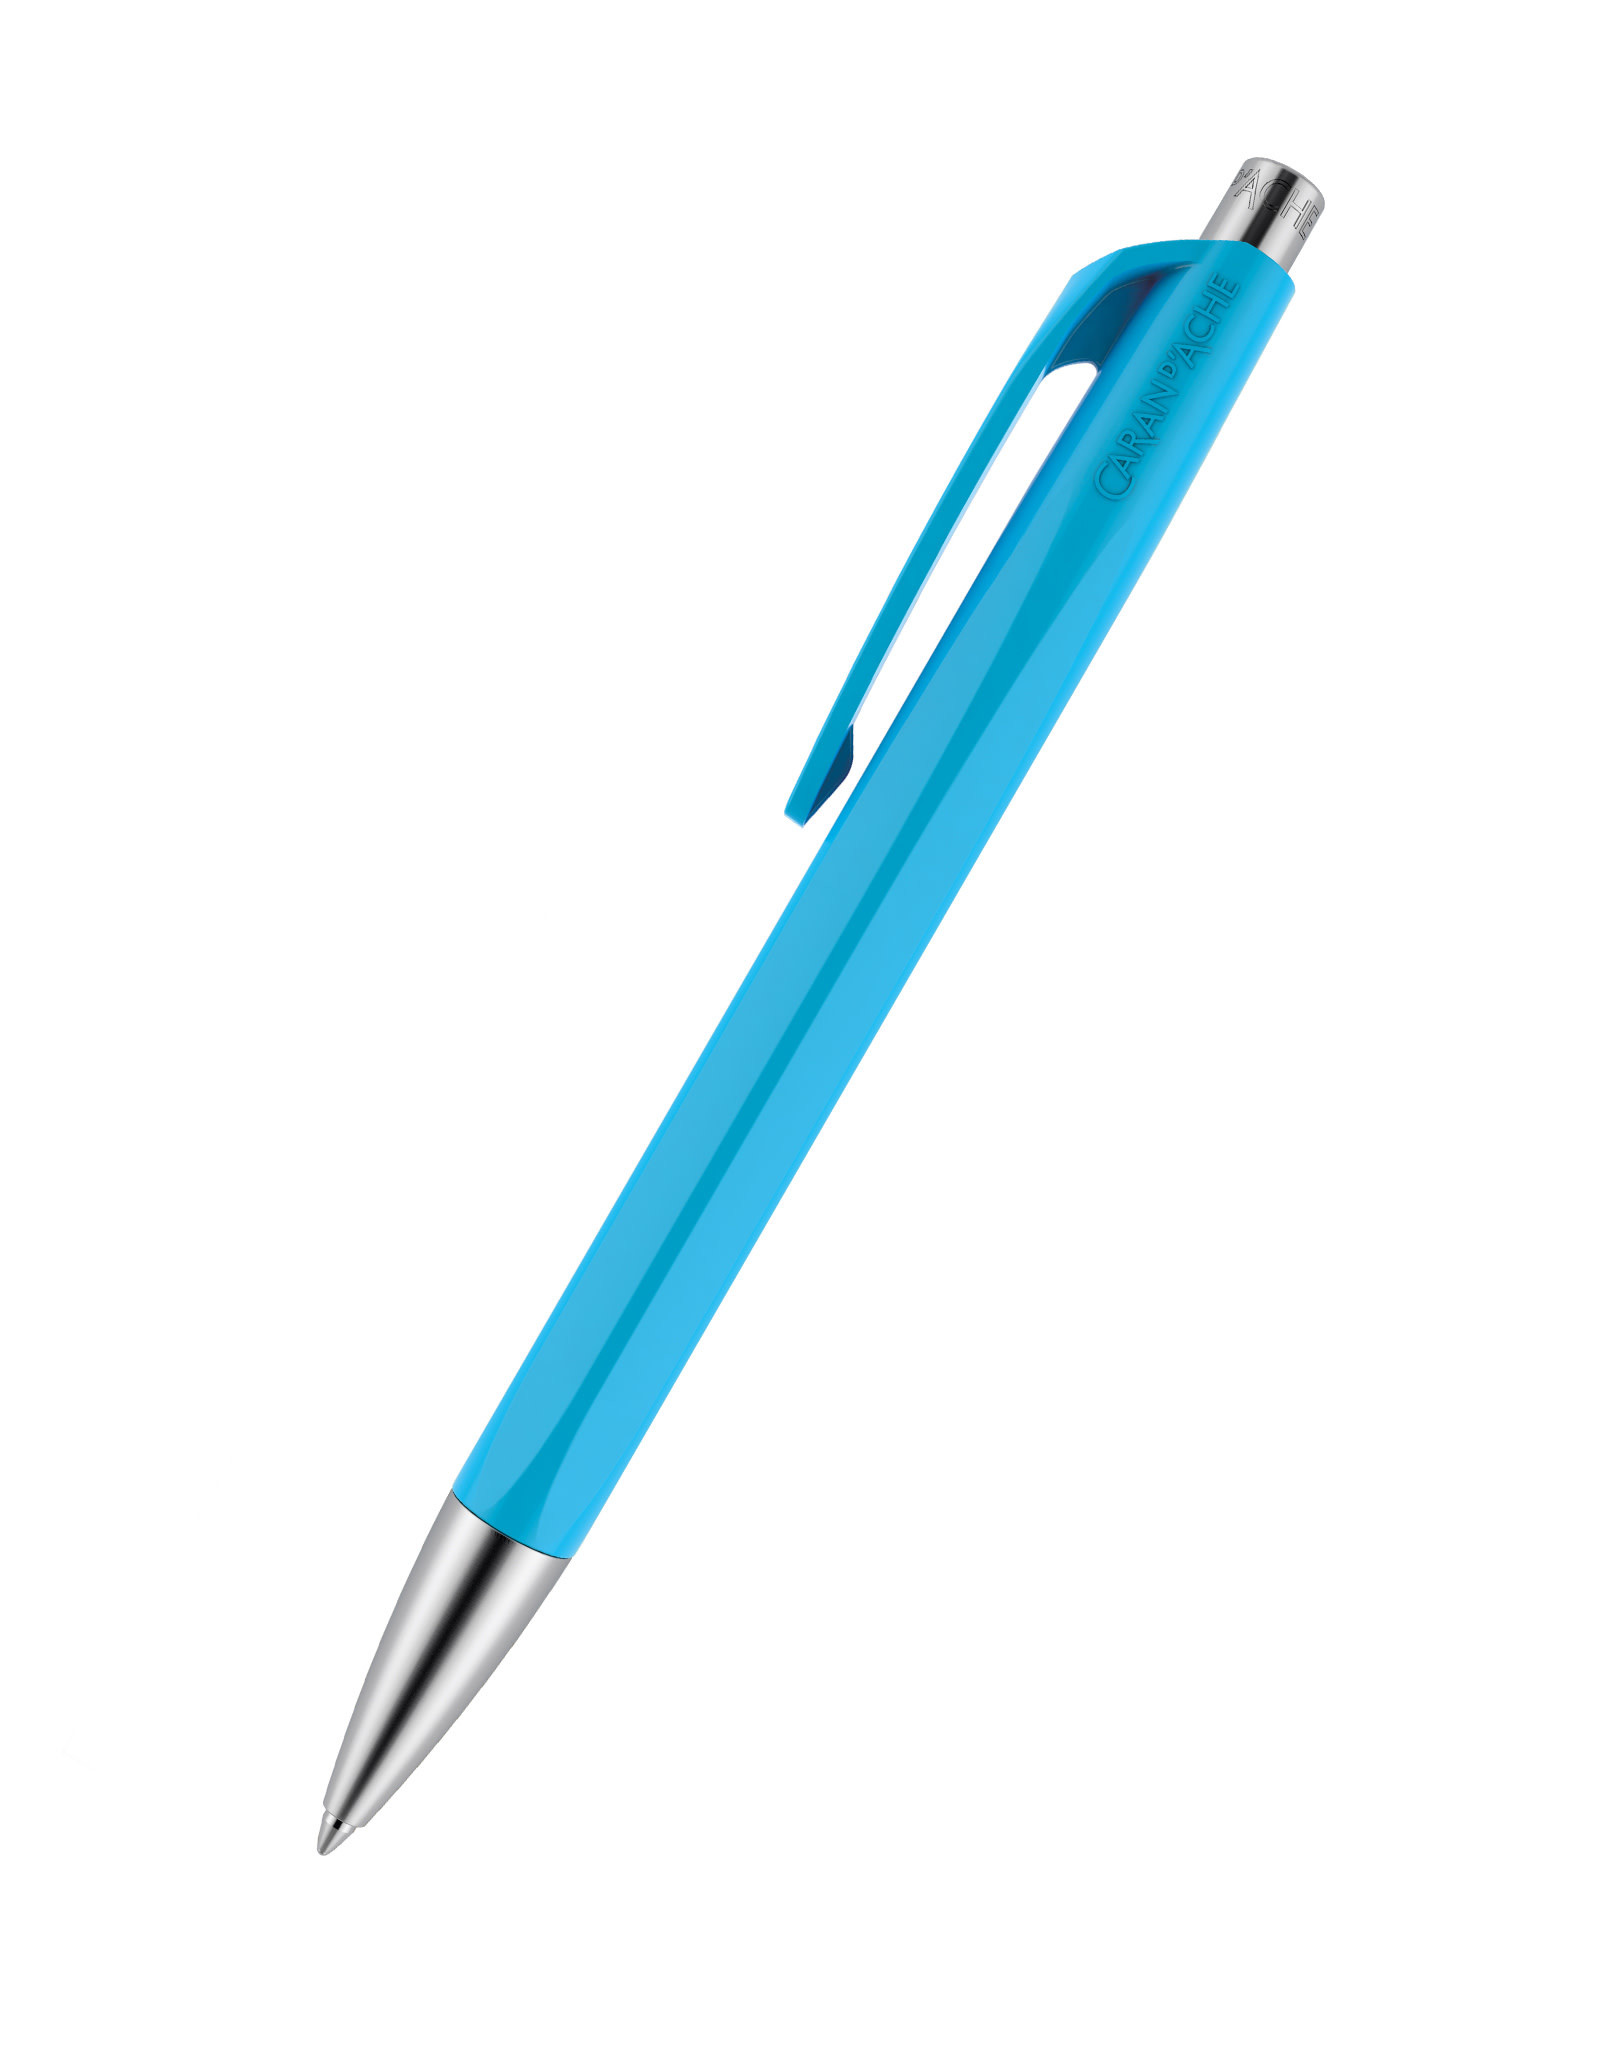 Caran d'Ache Caran D’Ache 888 Infinite Ballpoint Pen, Turquoise Blue